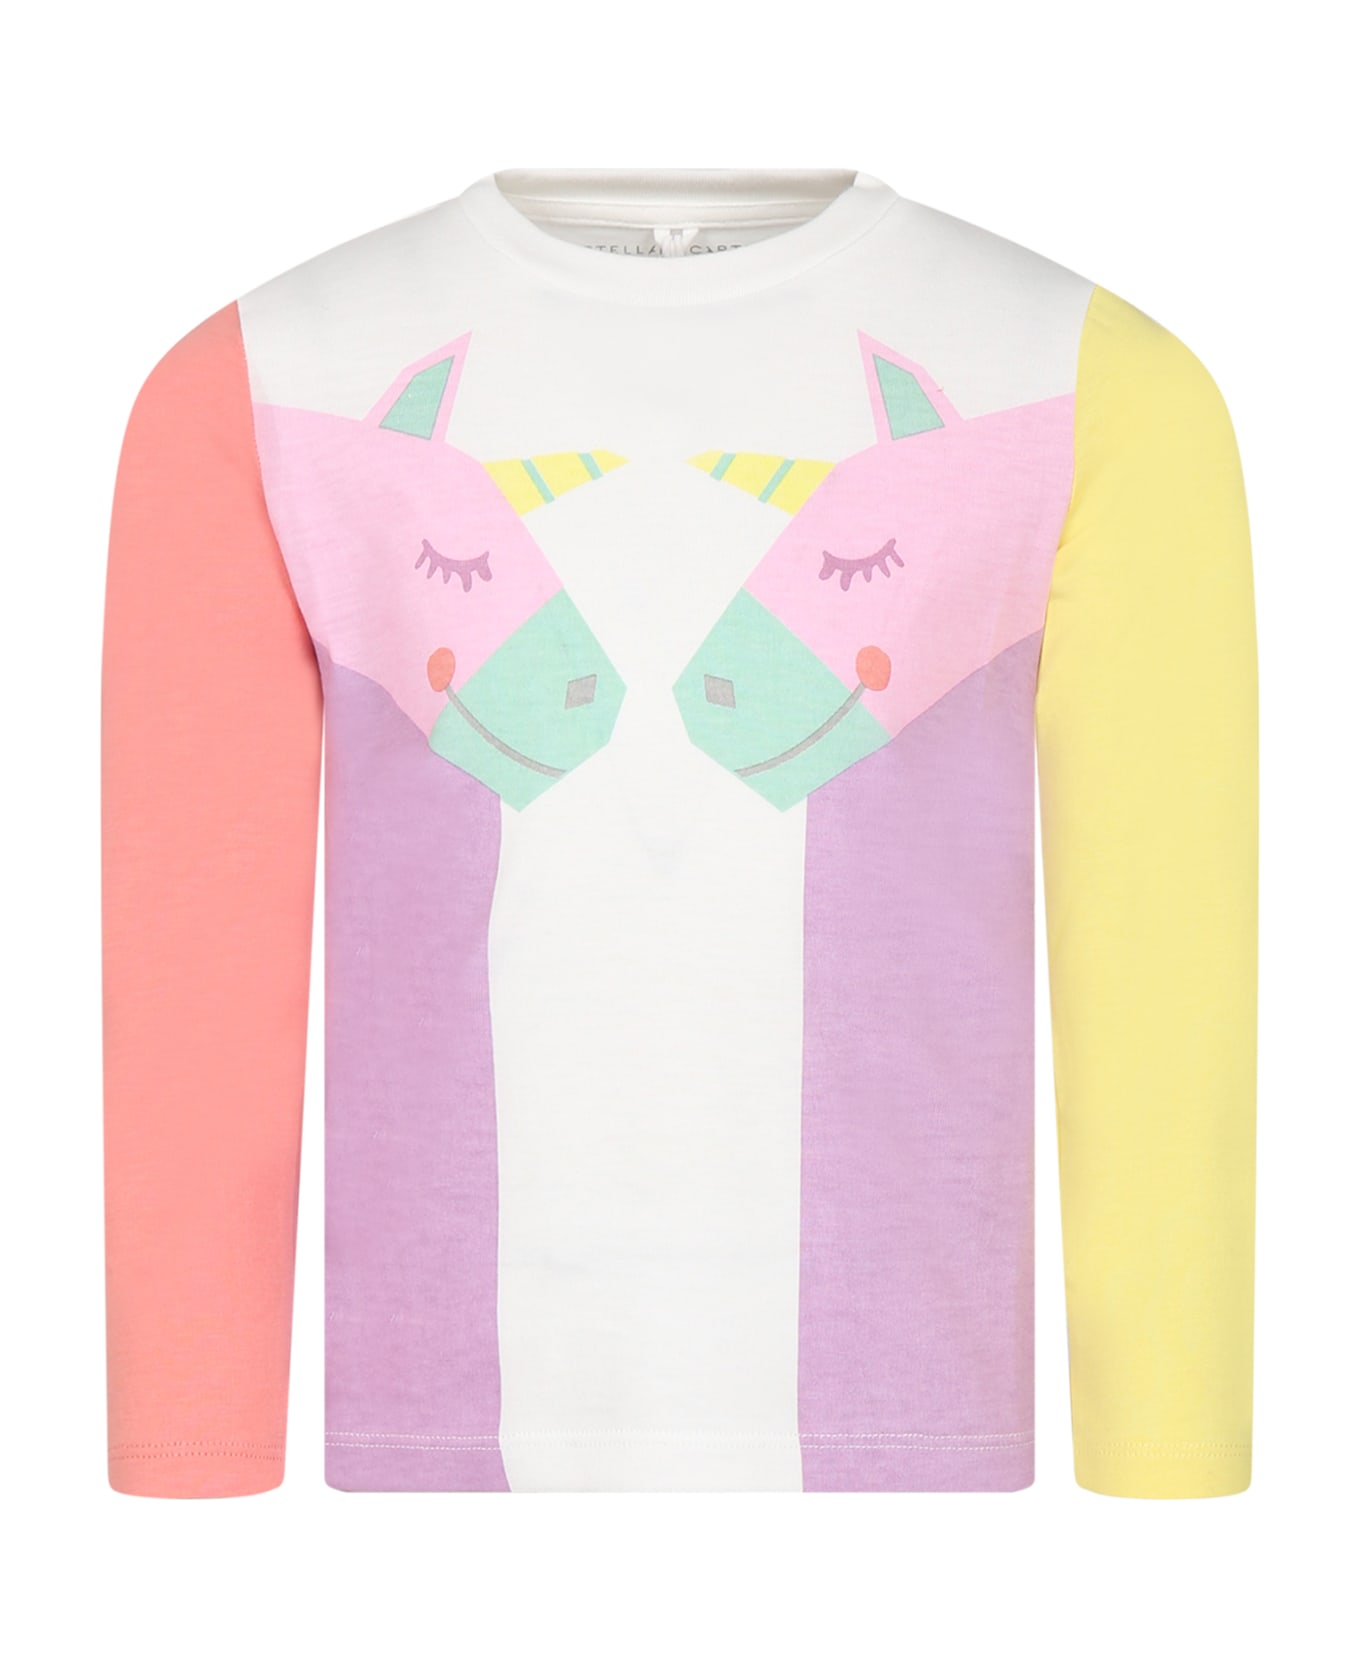 Stella McCartney Kids White T-shirt For Girl With Unicorns - Multicolor